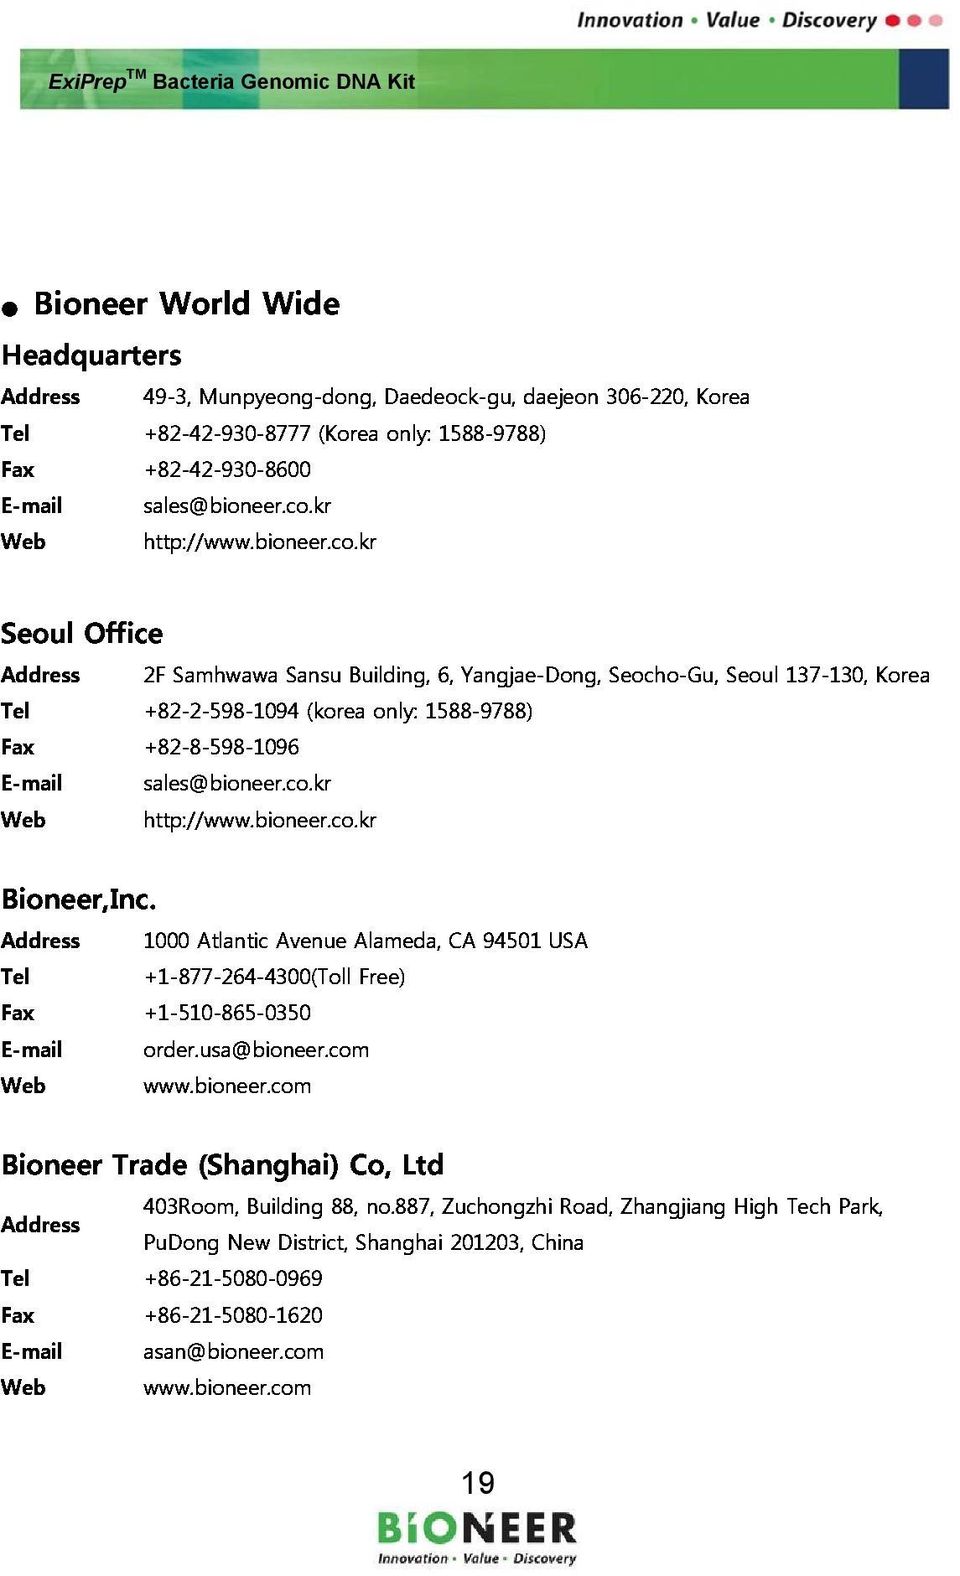 Tel Fax E-mail Web 1000 +1-877-264-4300(Toll +1-510-865-0350 order.usa@bioneer.com www.bioneer.com Atlantic Avenue Alameda, Free) CA 94501 USA Bioneer Address Tel Fax Trade 403Room, (Shanghai) Building 88, Co, no.